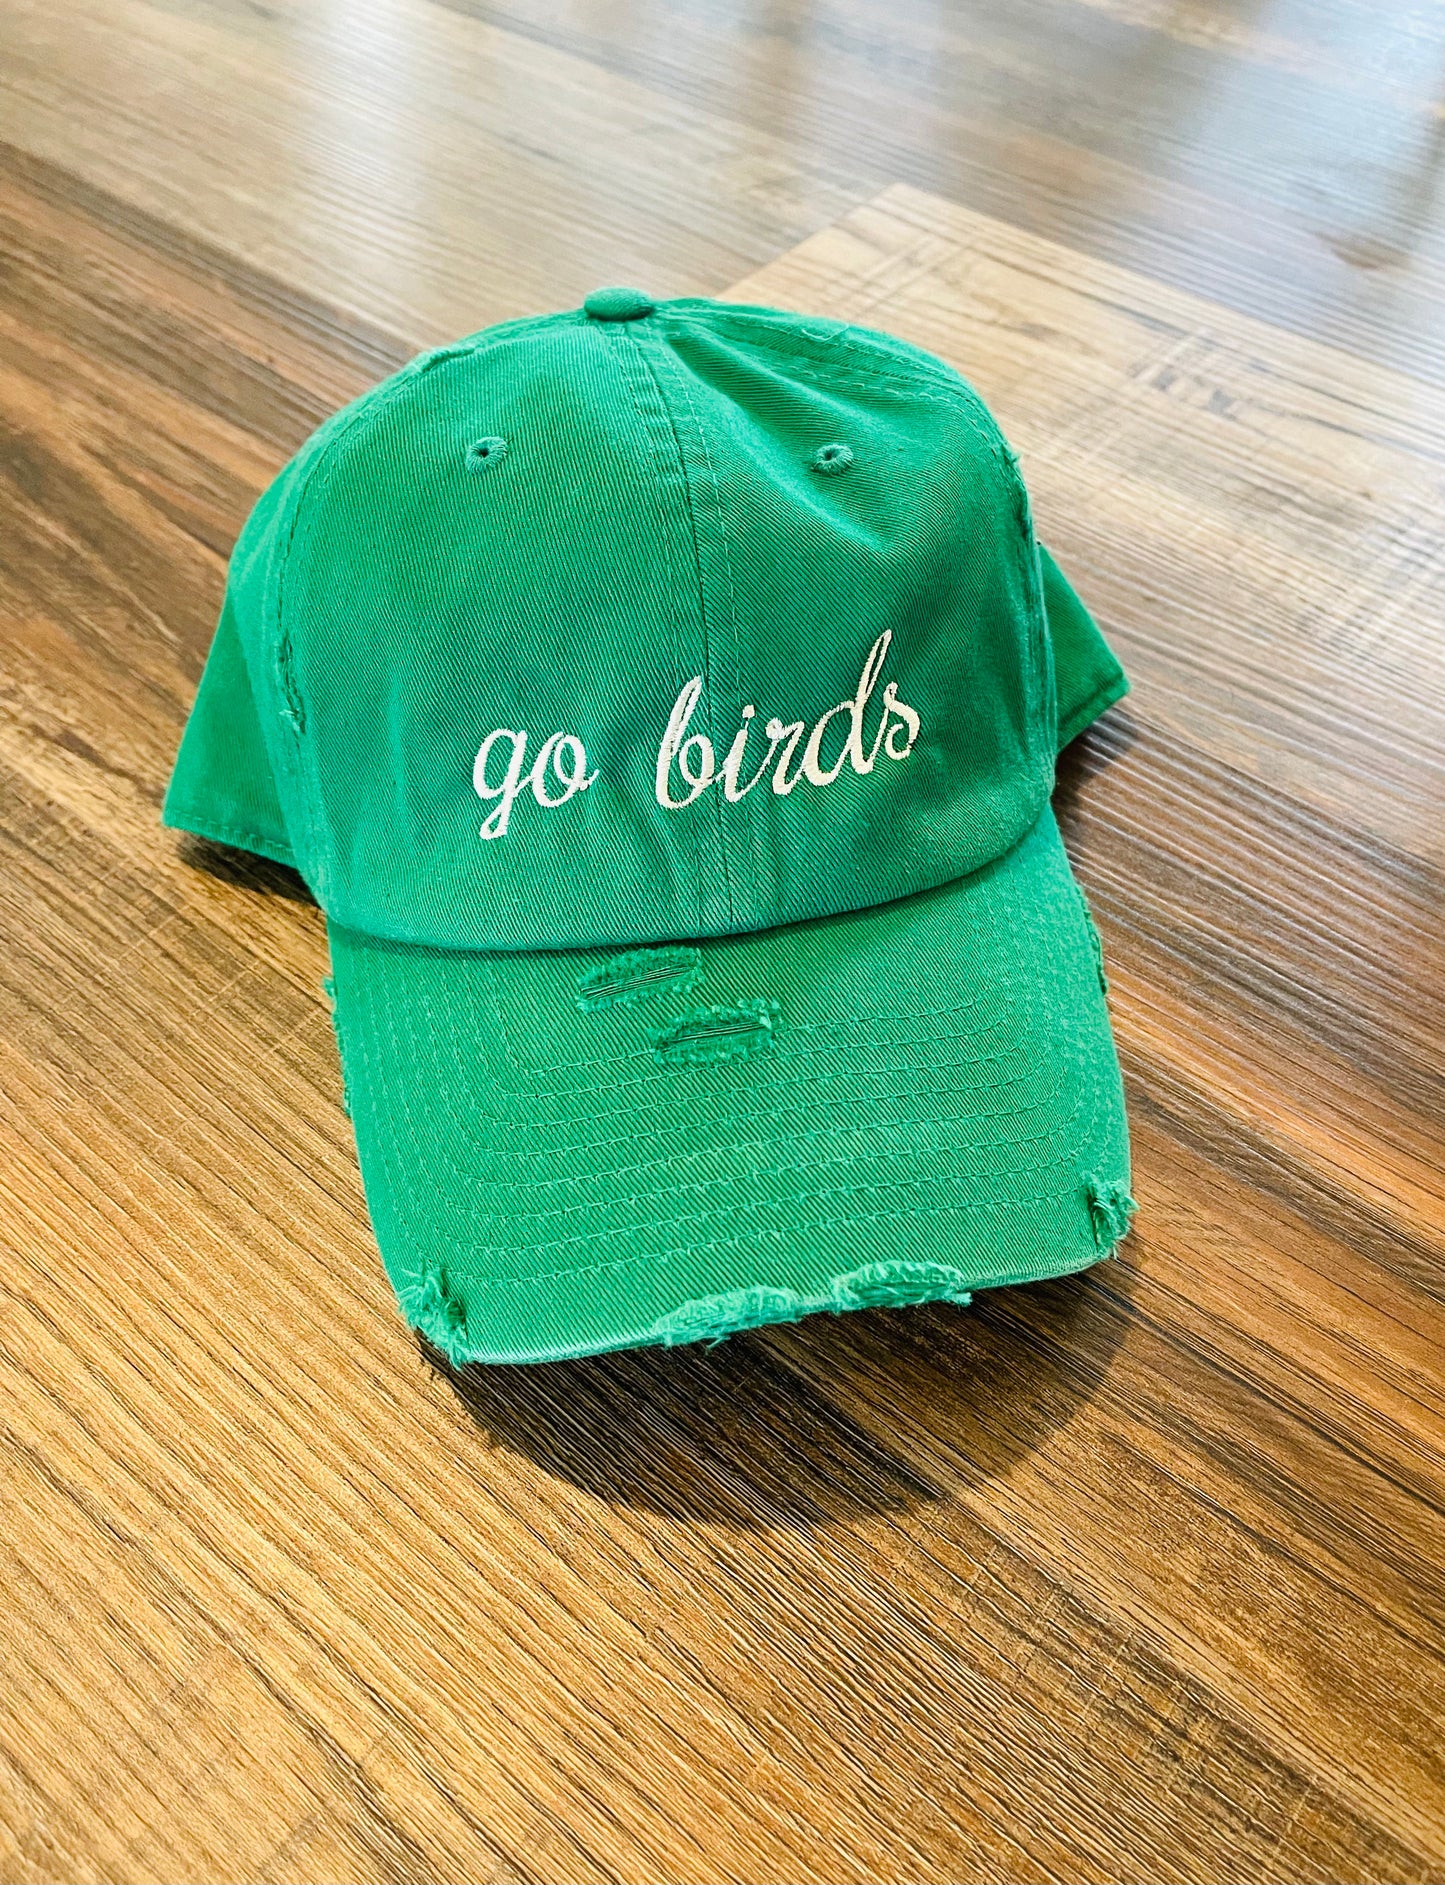 Go Birds distressed hat